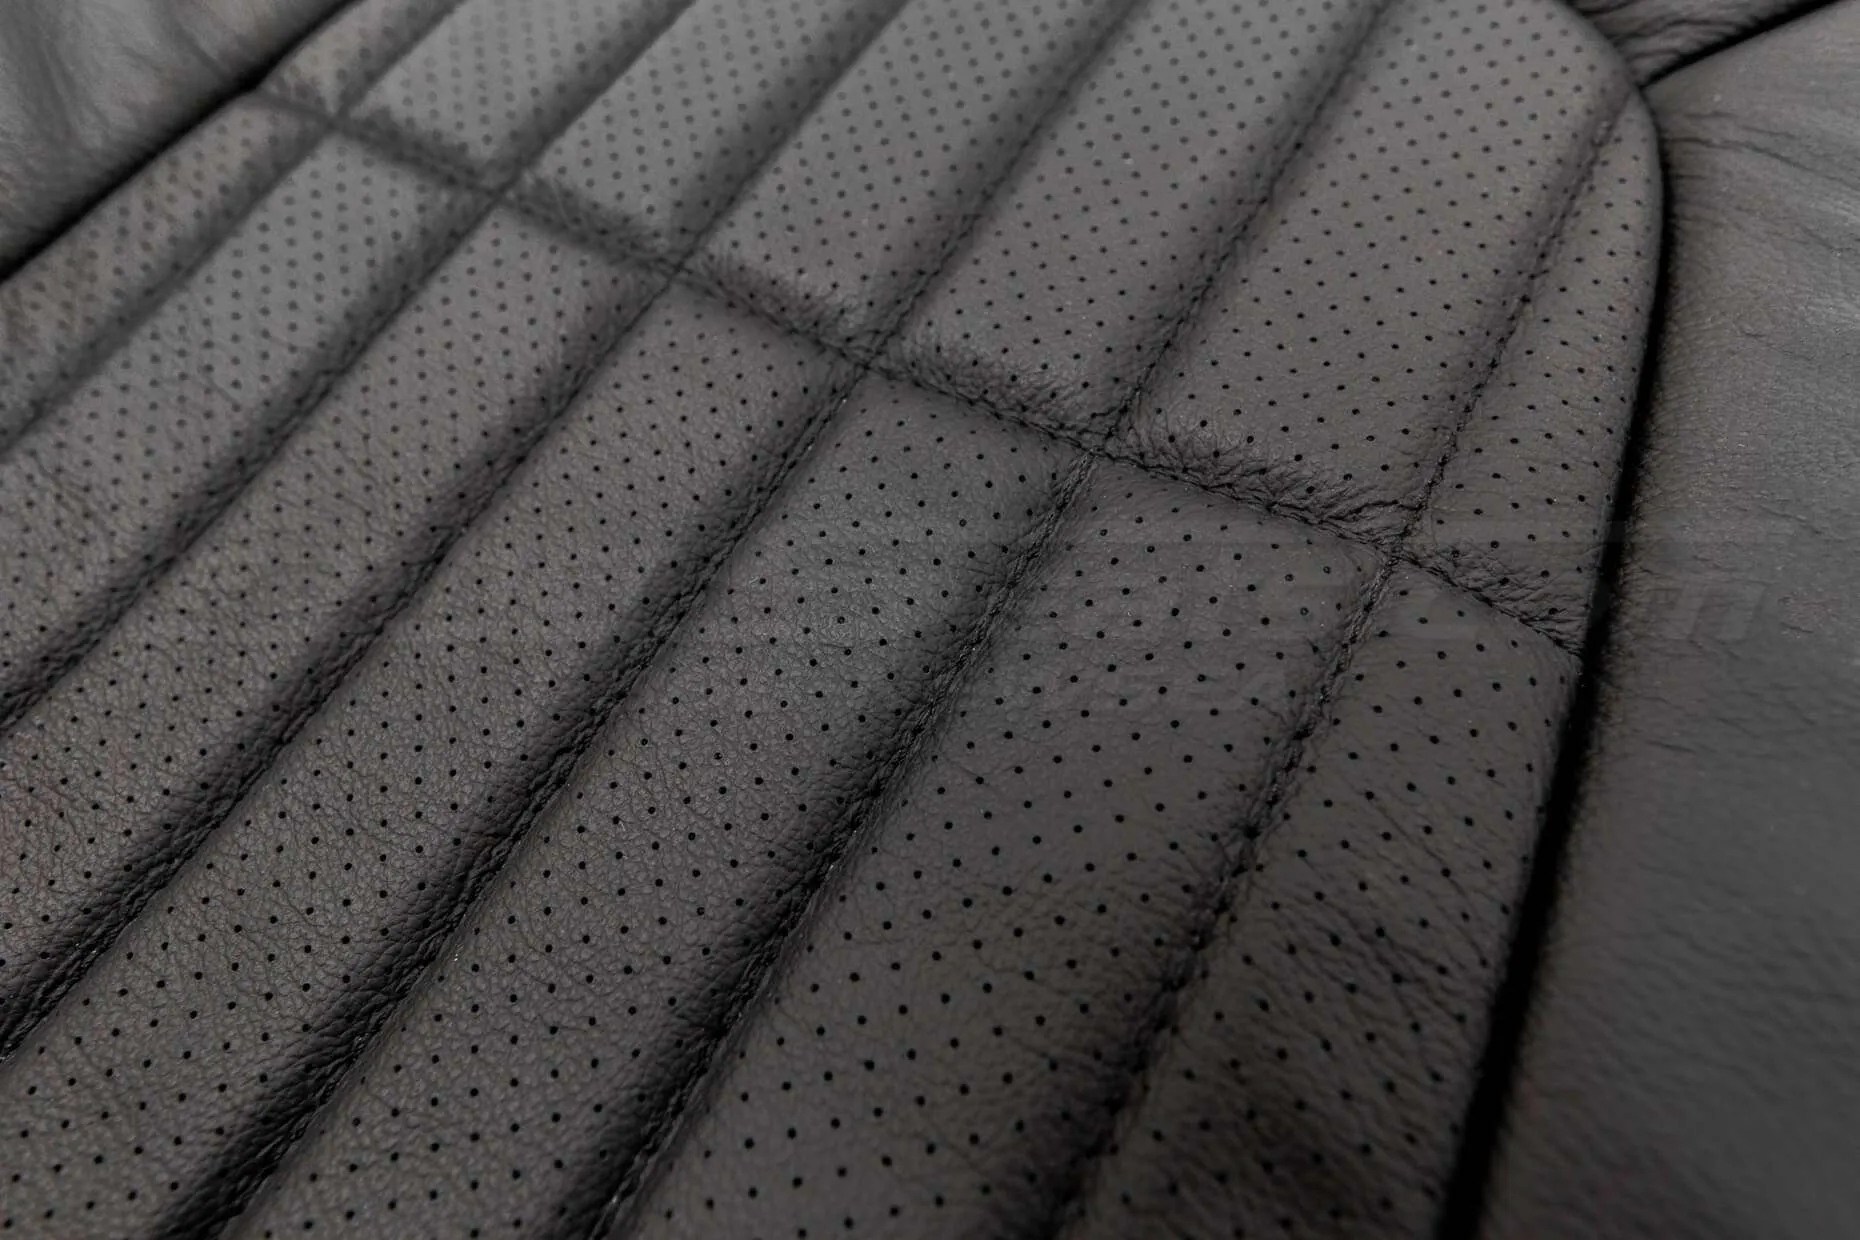 97-02 Chevrolet Camaro Leather Kit - Black - Perforation close-up